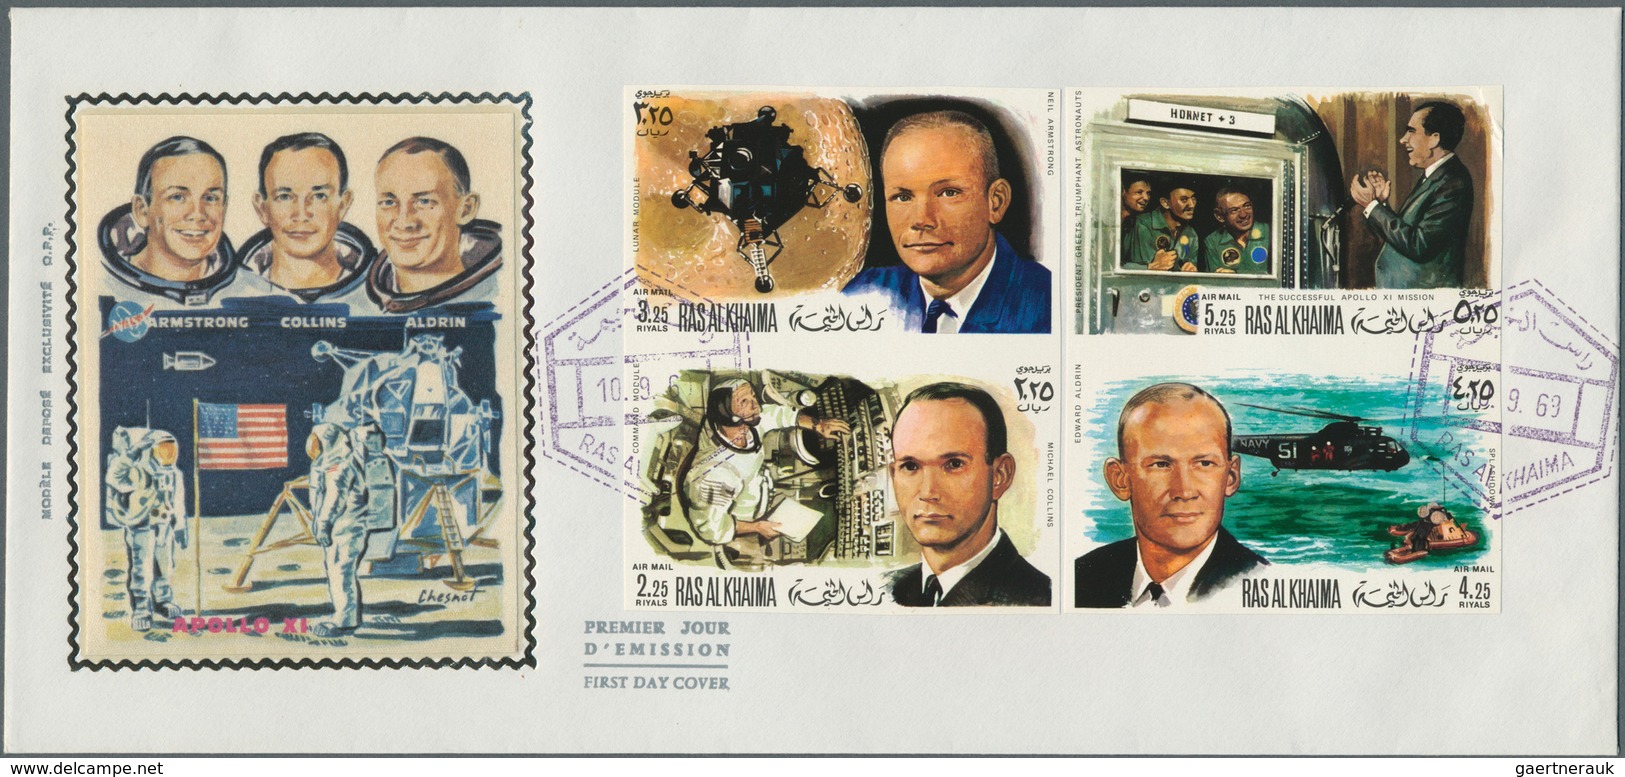 23896 Ras al Khaima: 1969/1970, Space/Apollo, group of eight cacheted envelopes incl. six souvenir sheets.